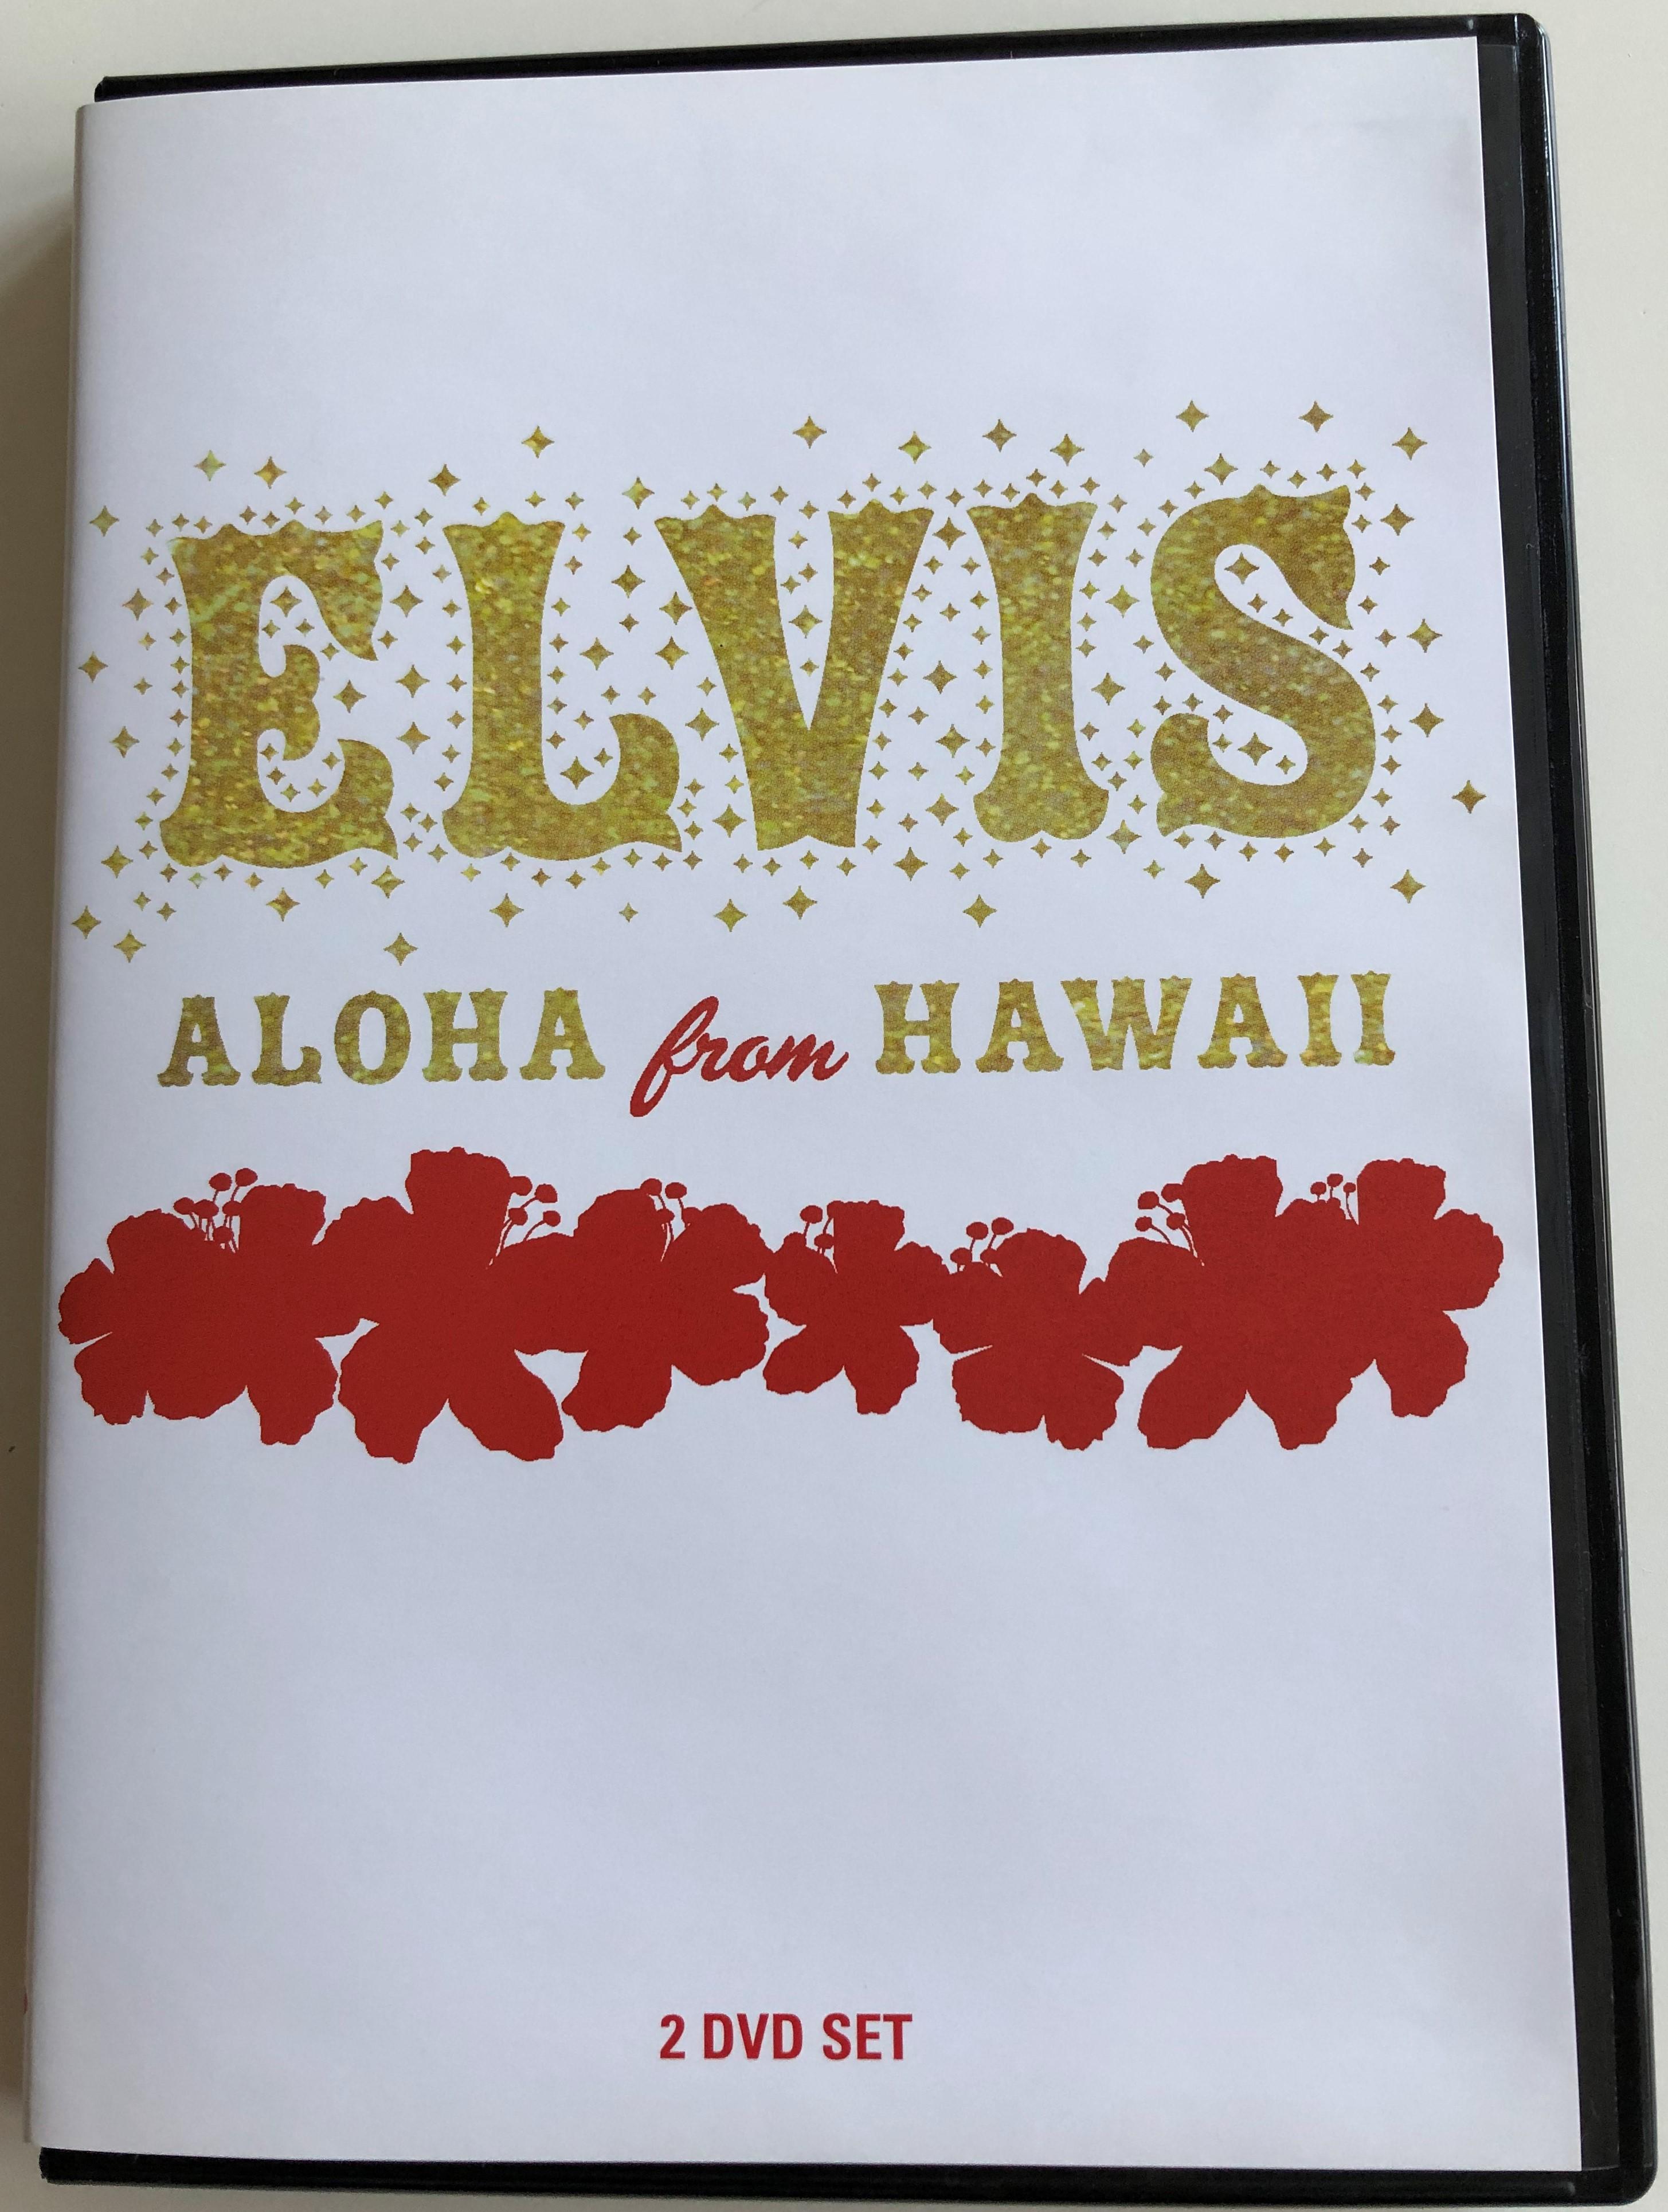 Elvis - Aloha from Hawaii 2 DVD deluxe edition 2004 1.JPG